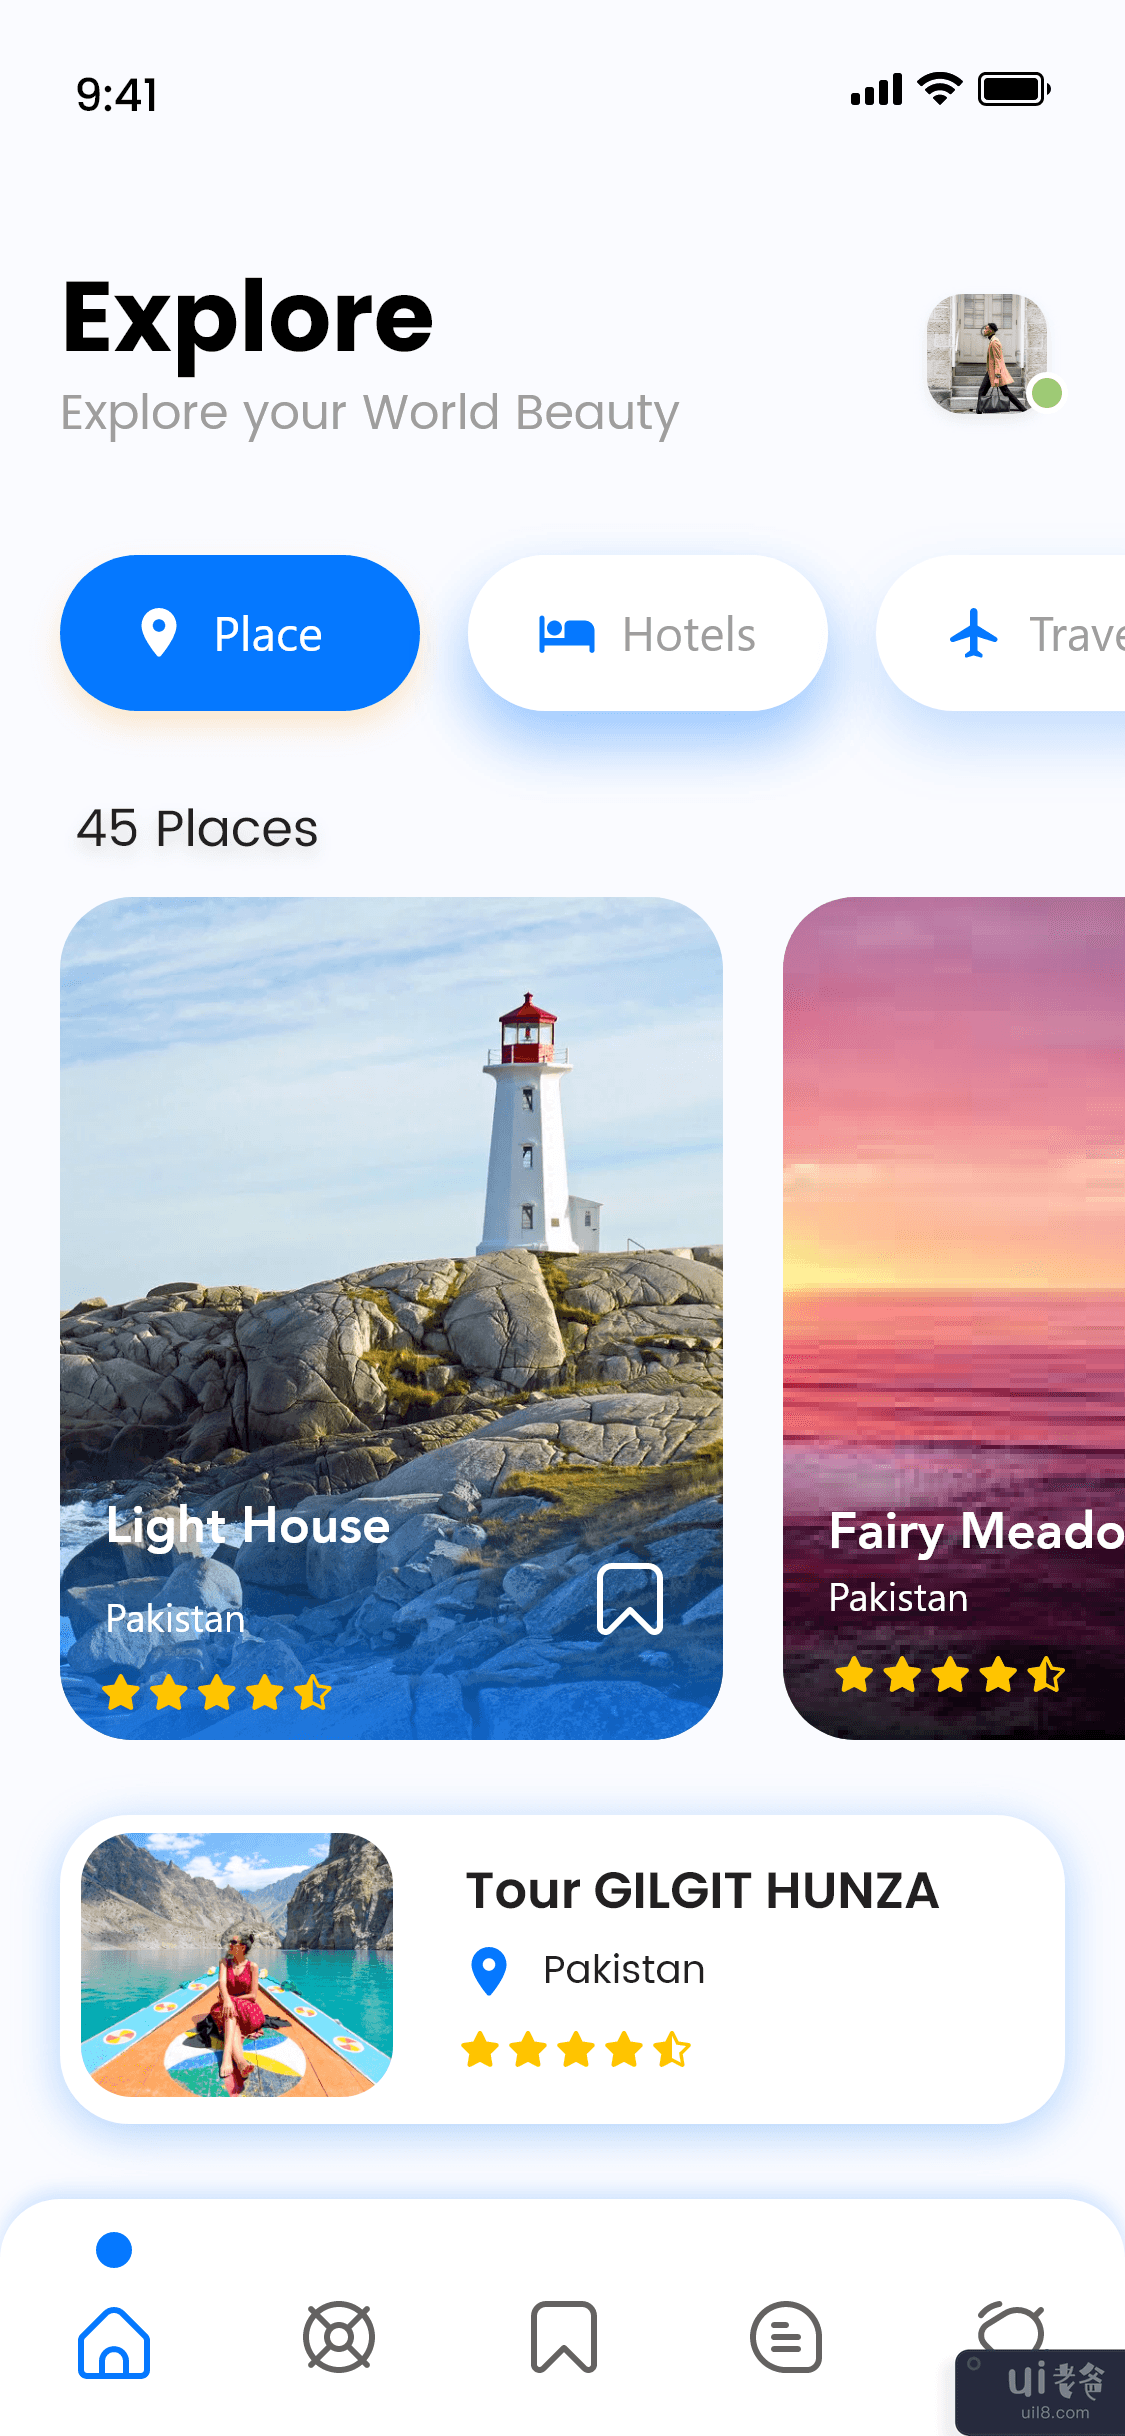 Travel App V3 - Travel App UI 设计理念 - 酒店预订应用(Travel App V3 - Travel App UI Design Concept - Hotel Booking app)插图